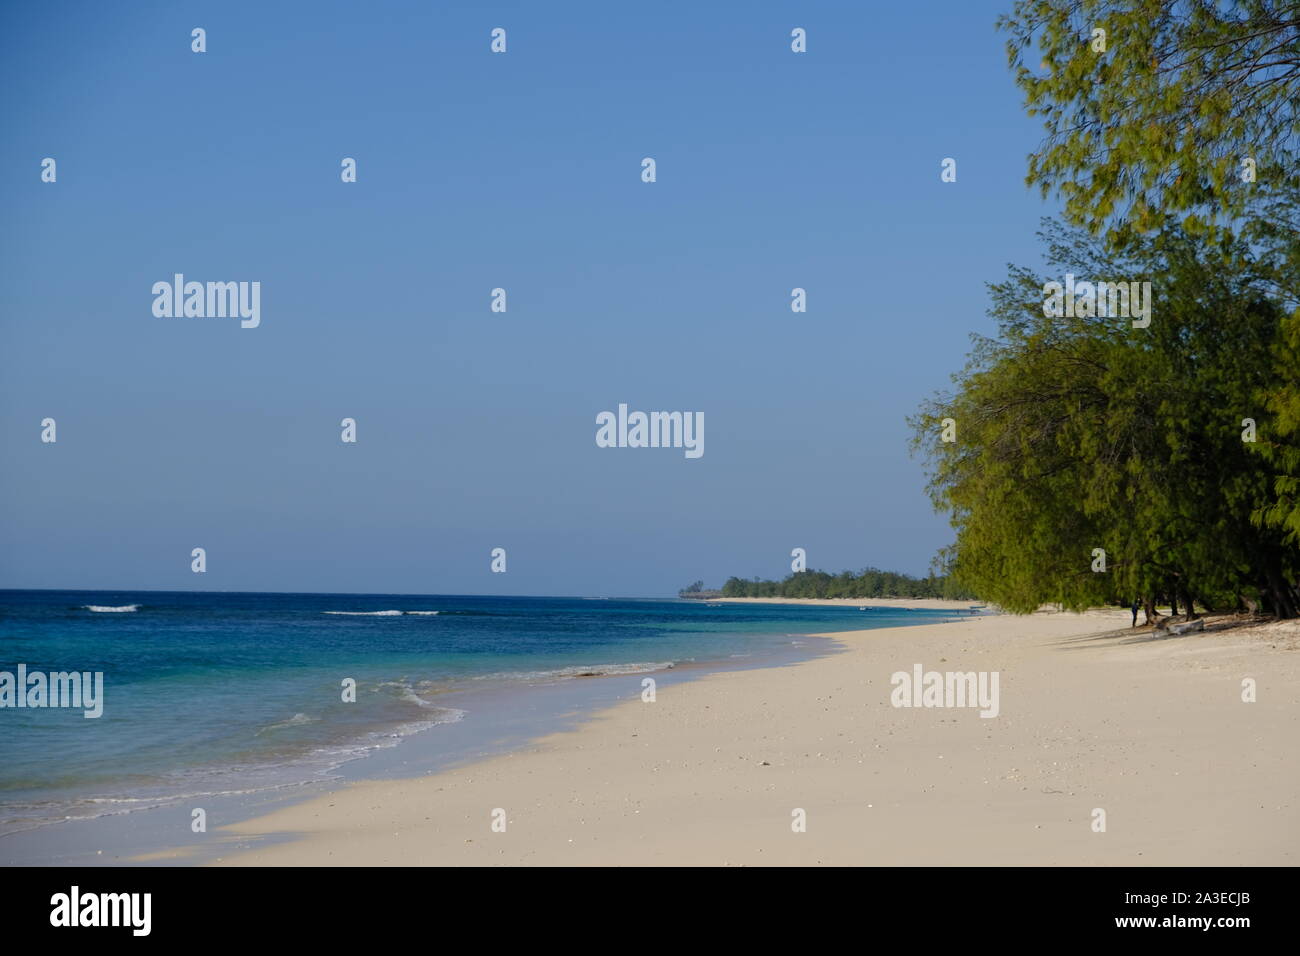 Indonesia Sumba Island Pantai Puru kambera coastline landscape photo Stock Photo